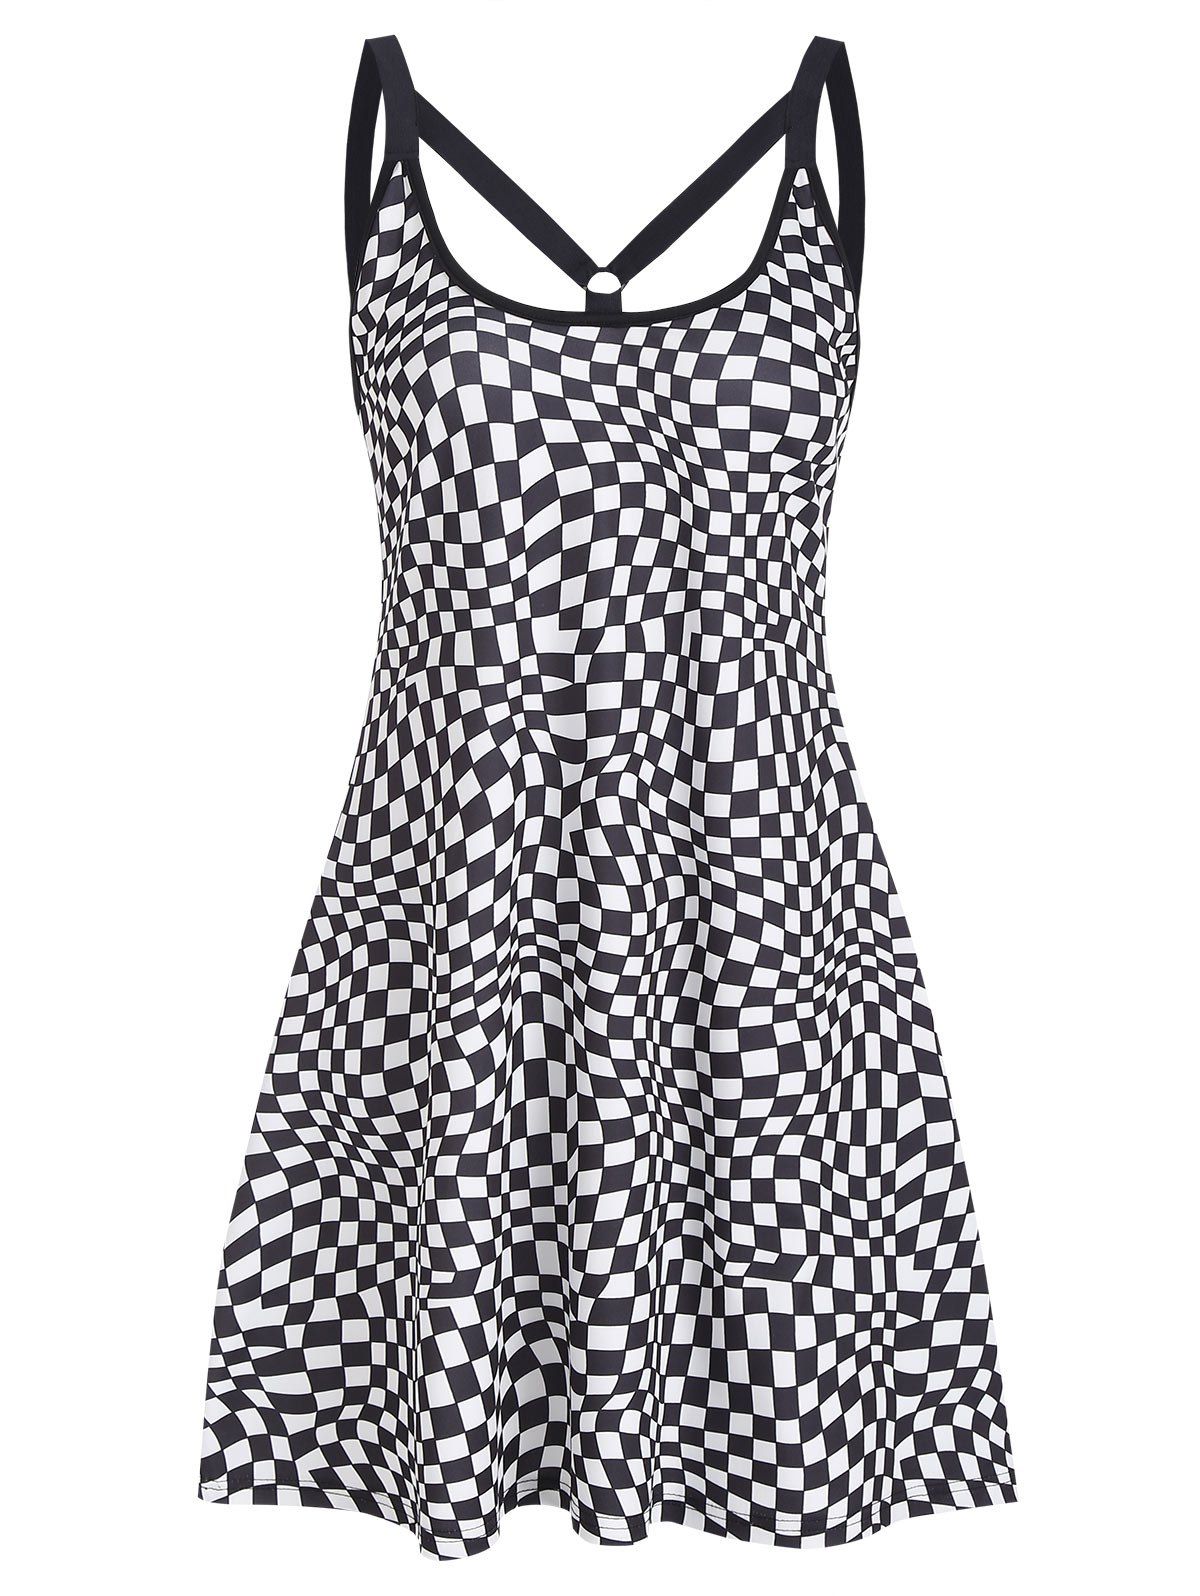 Casual Checkerboard Plaid Print O Ring Skater A Line Cami Dress - BLACK XL